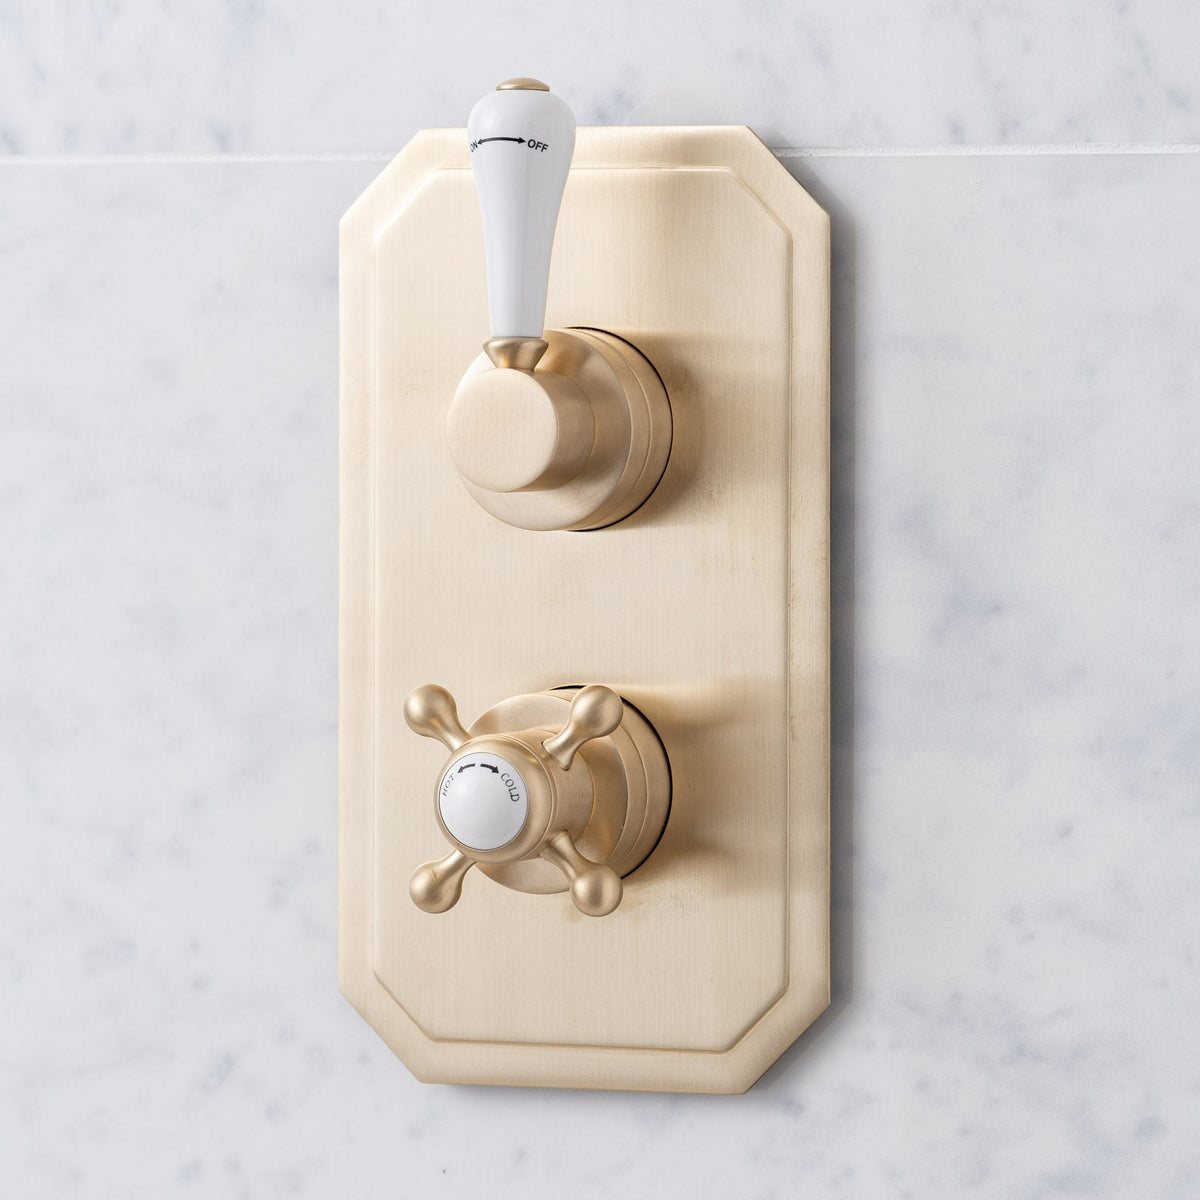 Wellington White Ceramic Lever &amp; Cleaver Telephone Handset Concealed Thermostatic Shower Set - Rutland London (USA) 